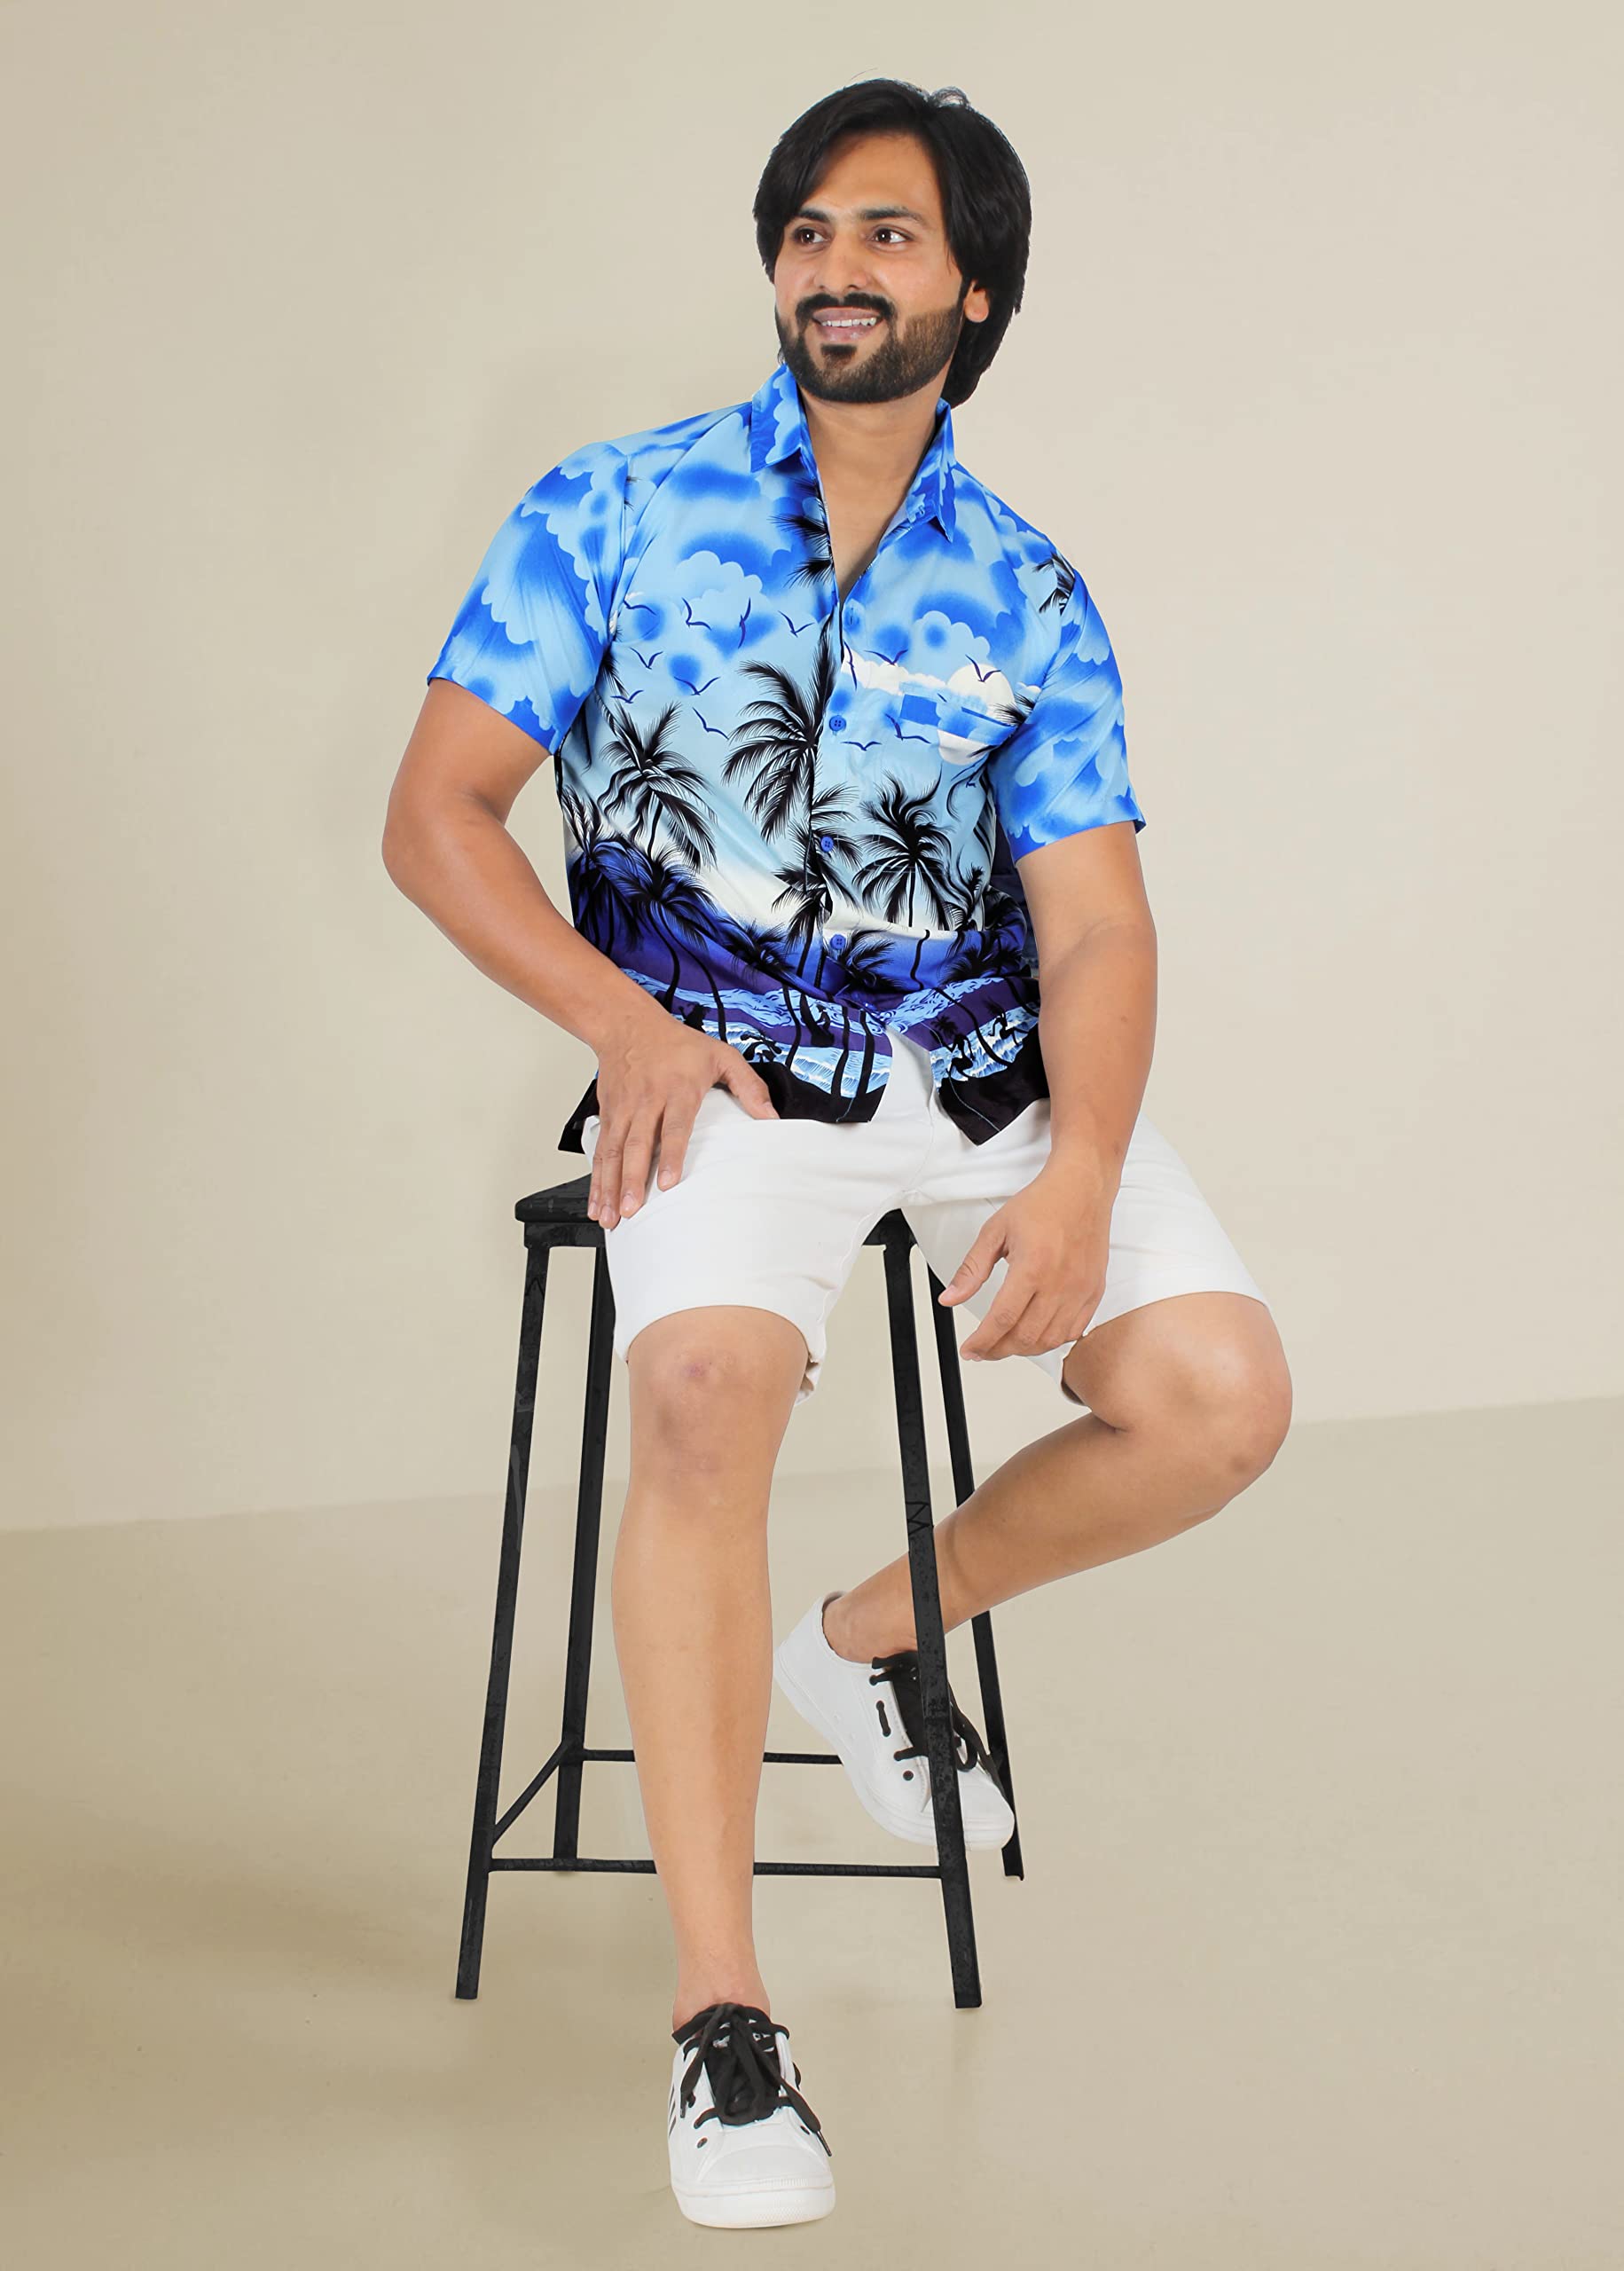 LA LEELA Men's Holiday Tropical Party Aloha Shirts Short Sleeve Button Down Beach Hawaiian Shirt for Men